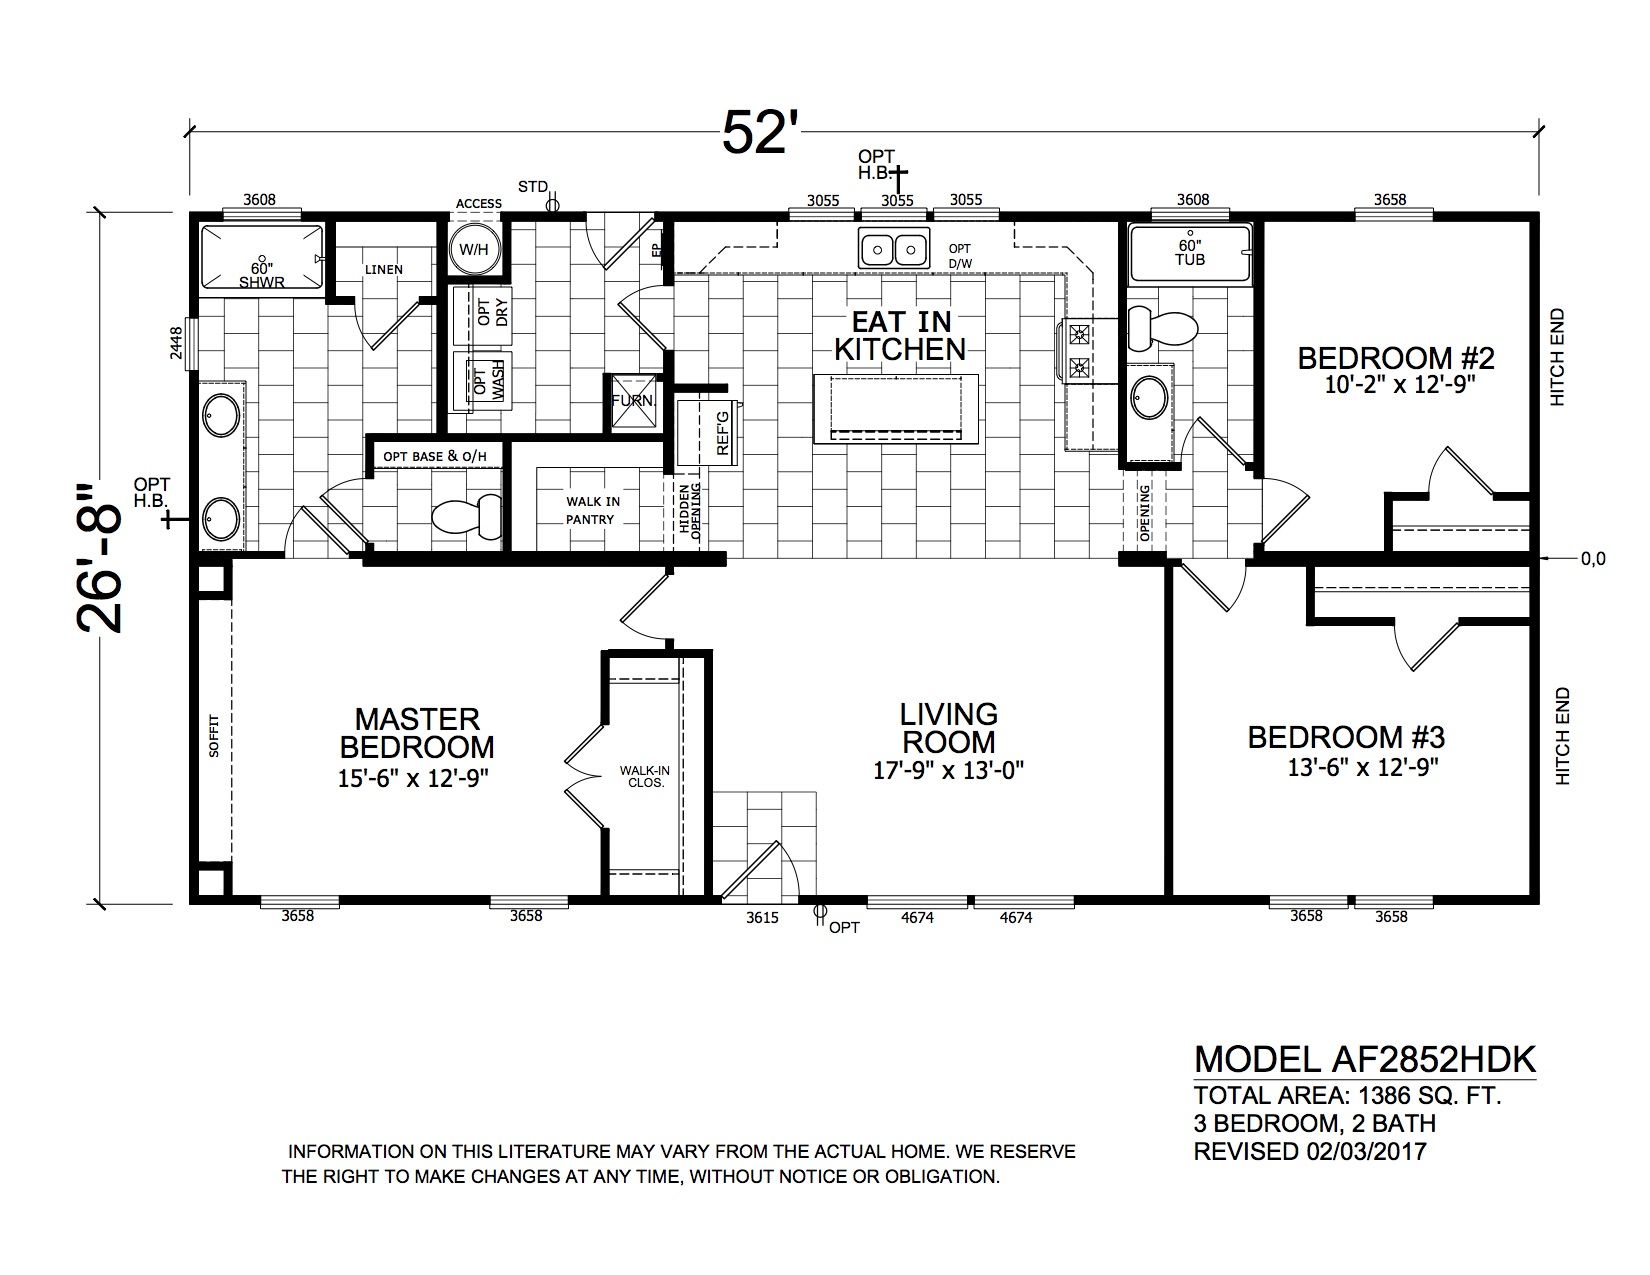 Homes Direct Modular Homes - Model HD2852 - Floorplan